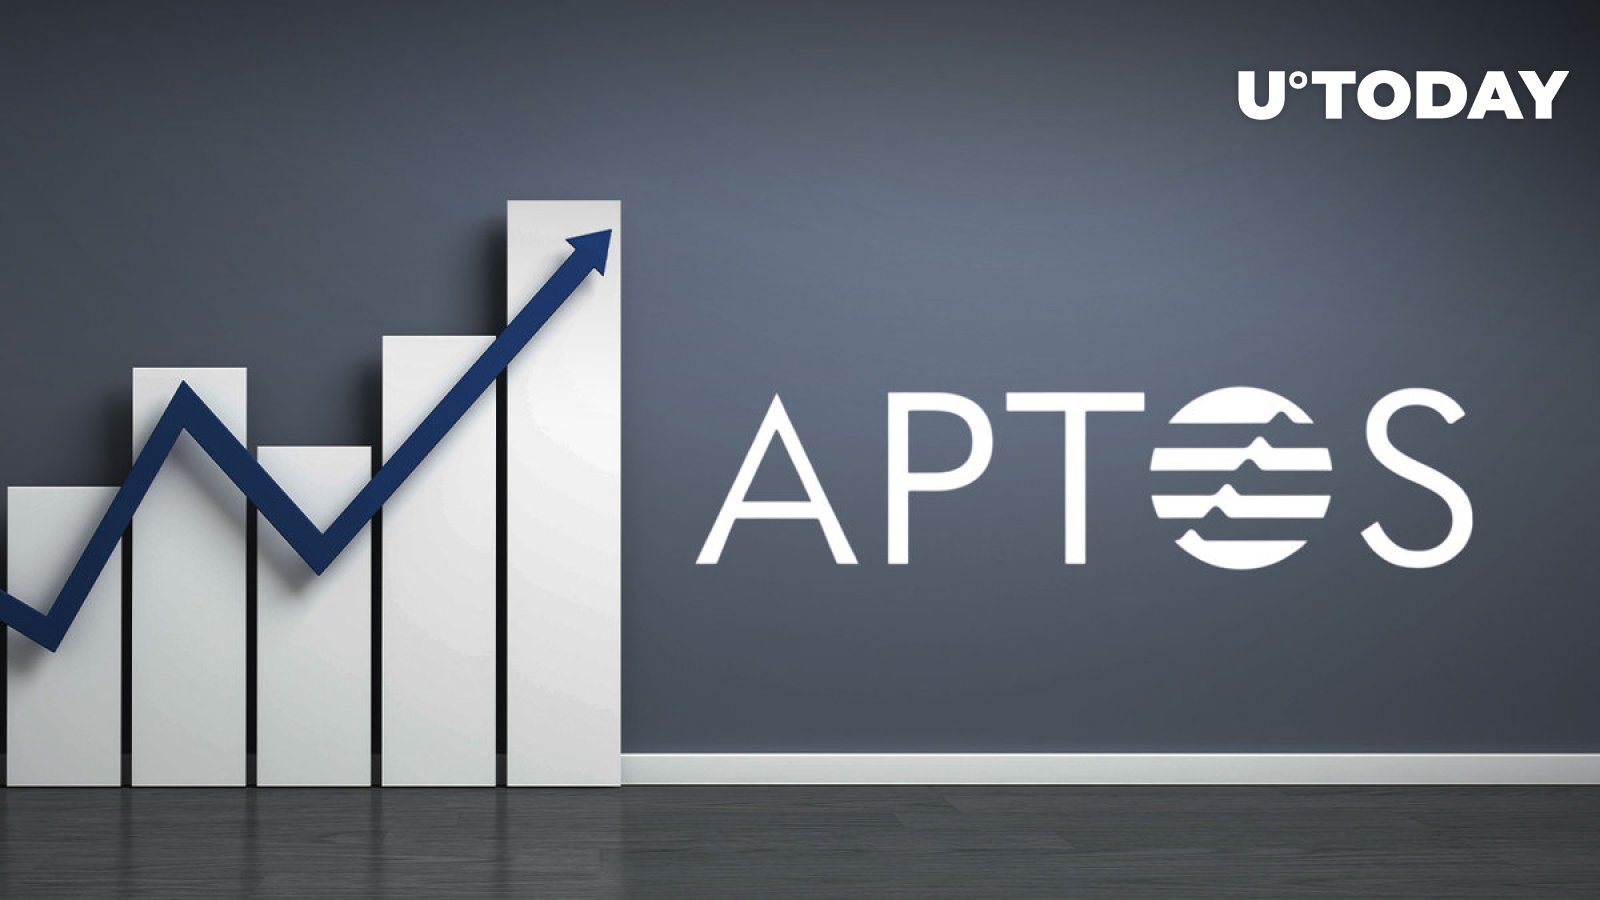 Aptos (APT) up 22%, Top Reasons Driving Price Growth